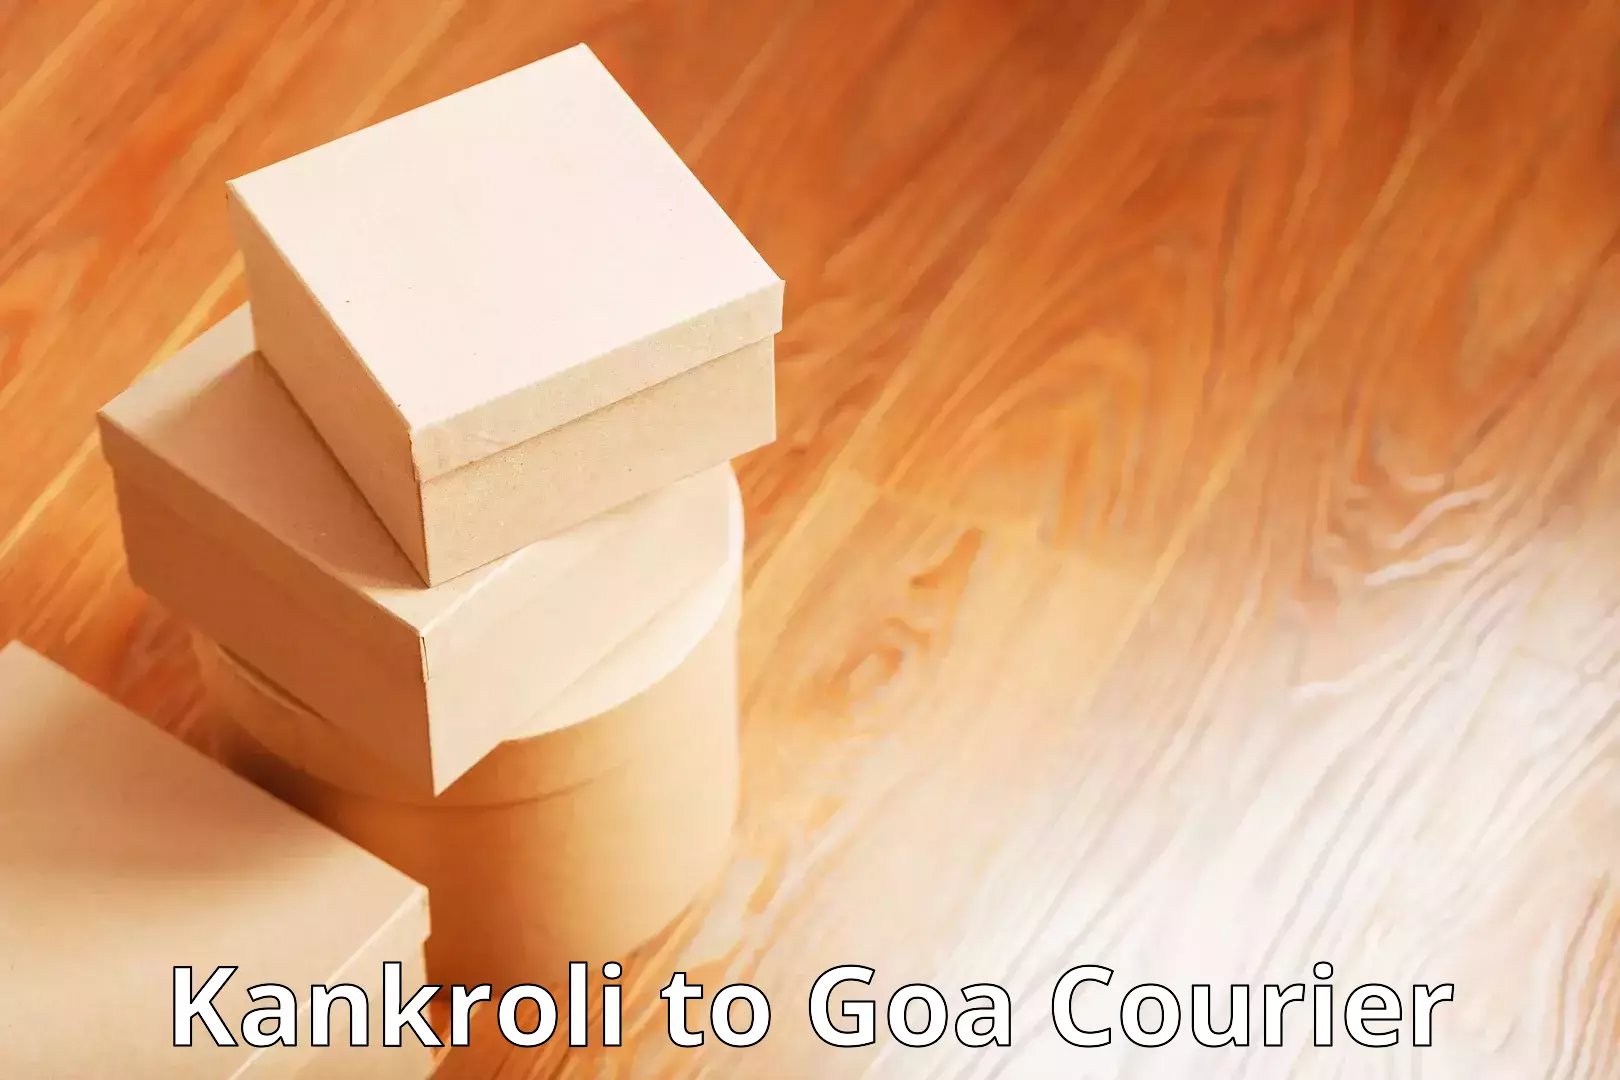 Courier service comparison Kankroli to South Goa